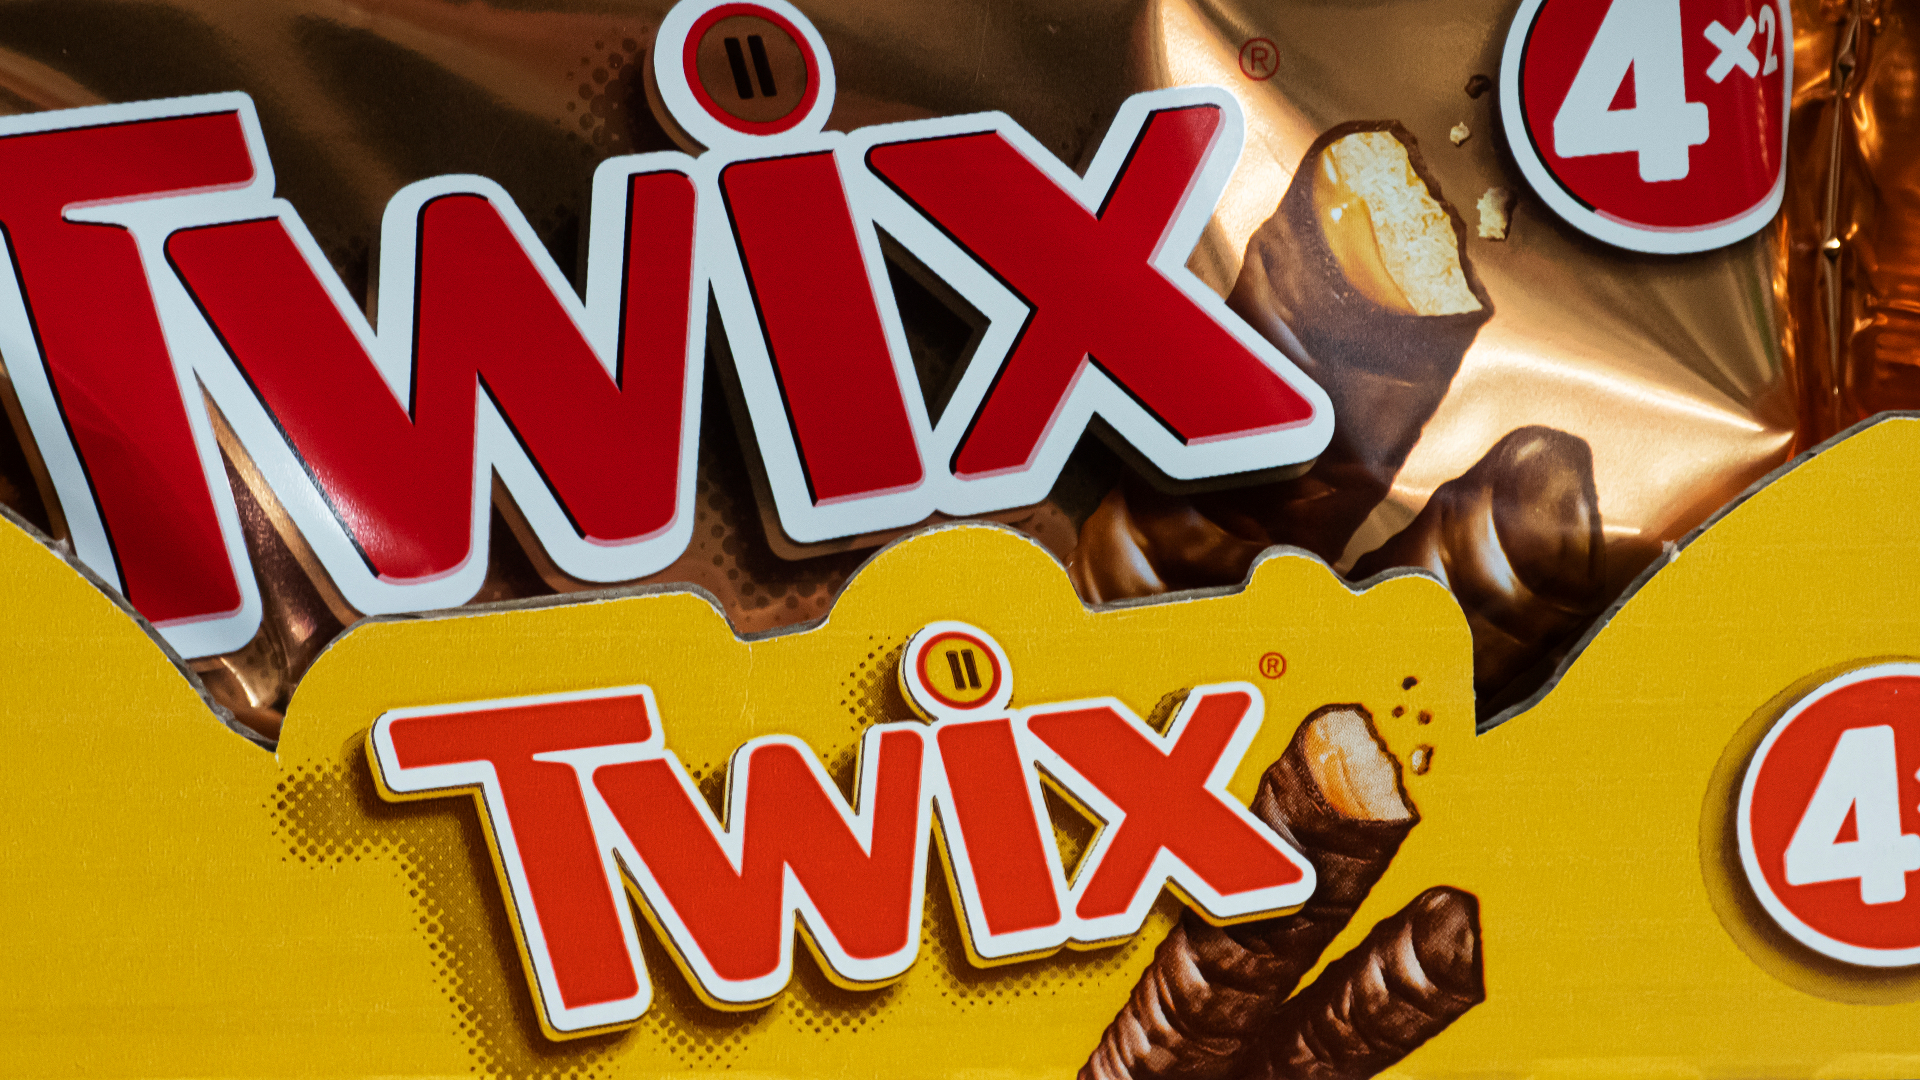 Twix Shakers Chocolate, Caramel & Cookie Flavored Seasoning Blend